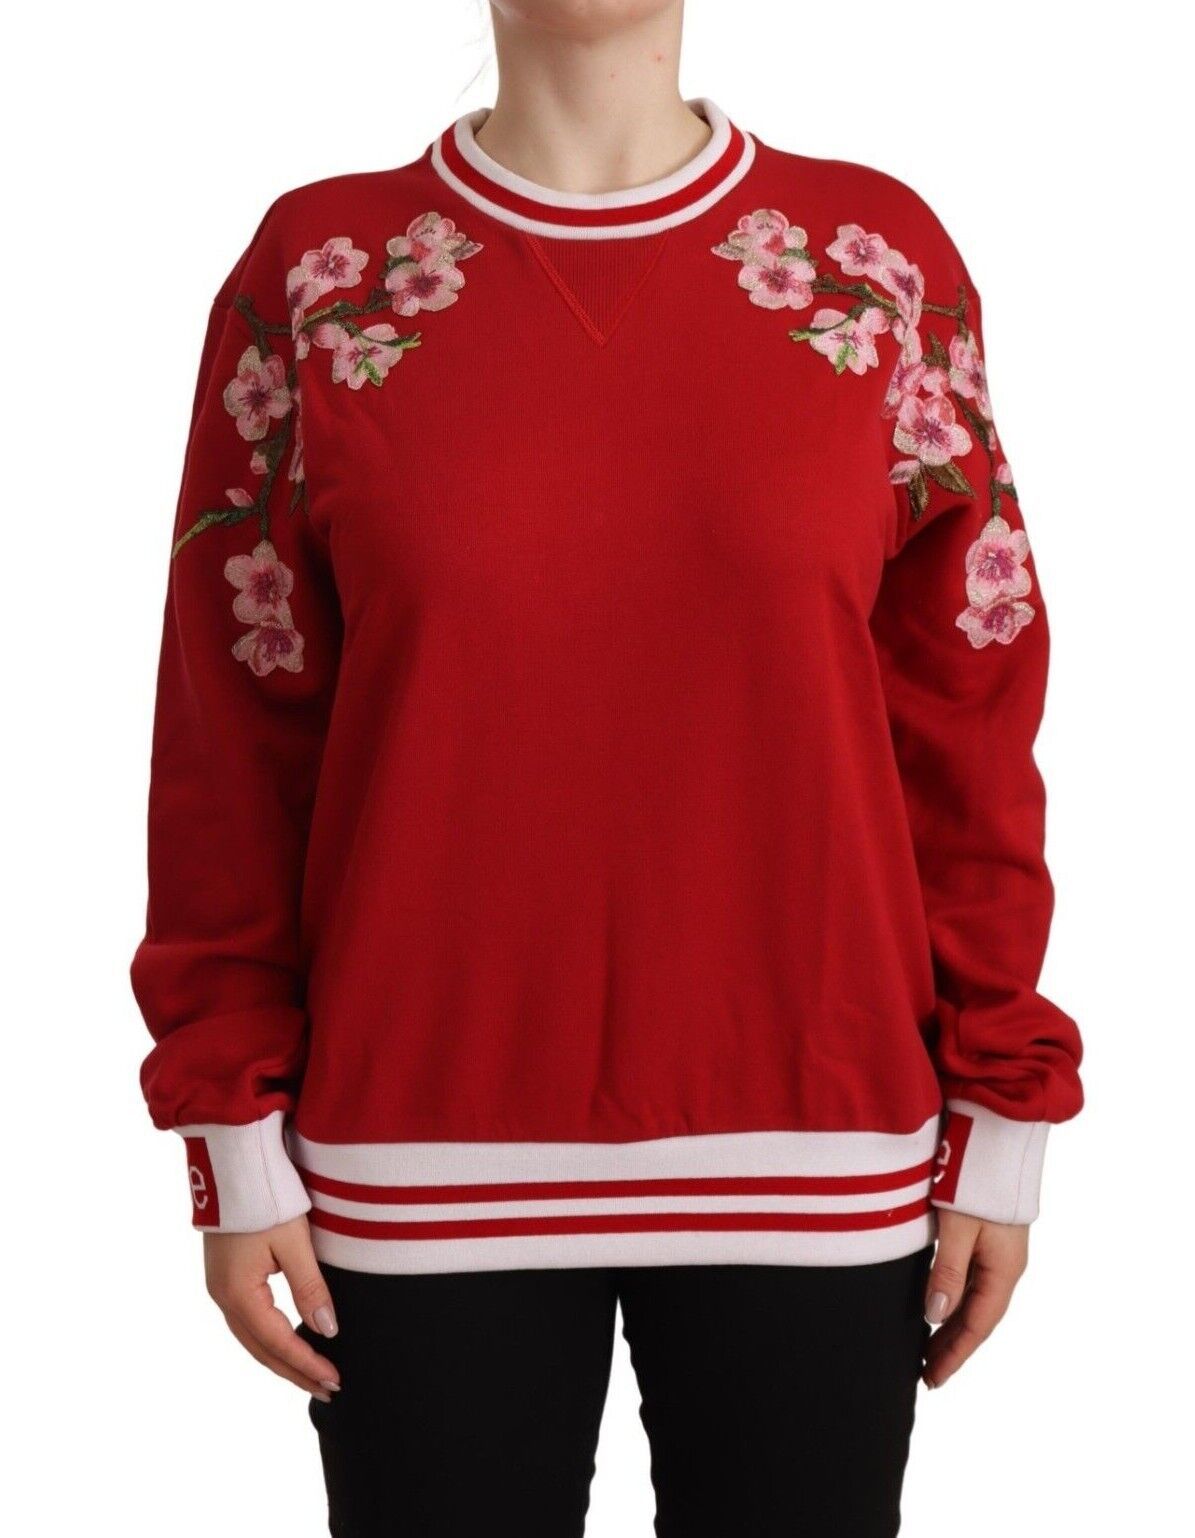 DOLCE & GABBANA Dolce & Gabbana  Cotton Crewneck #DGlove Pullover Women's Sweater